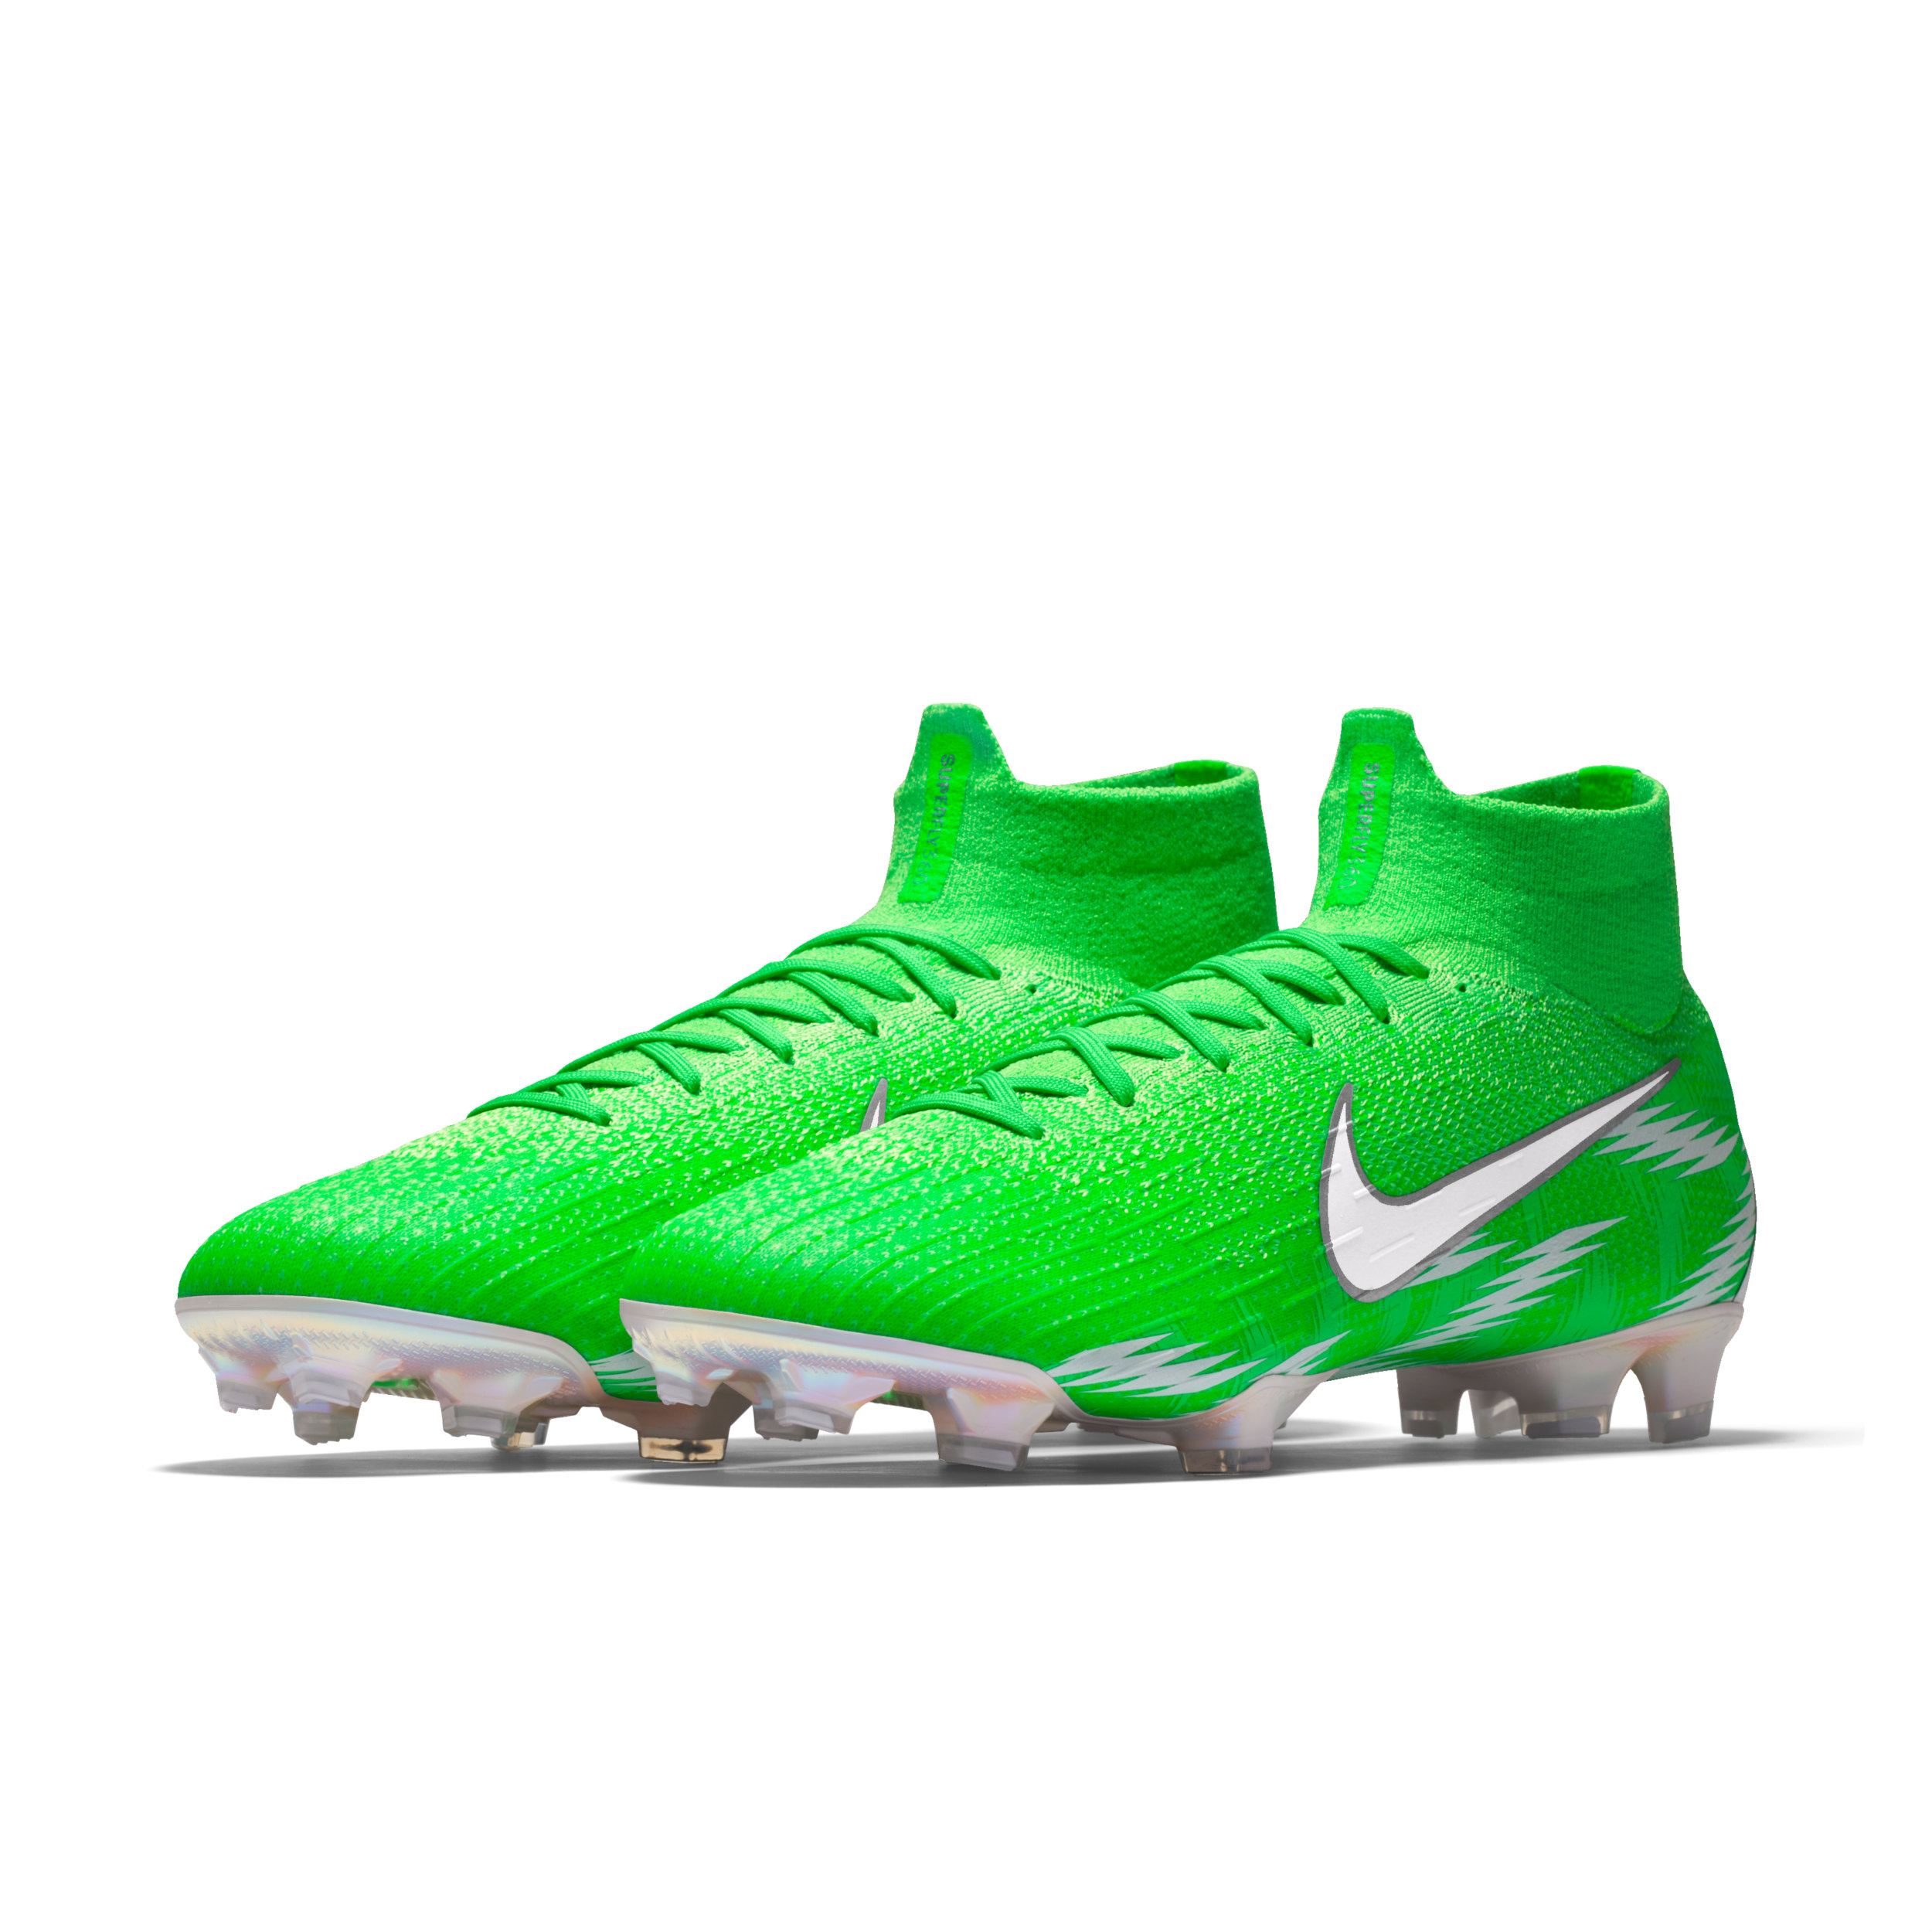 Nike Mercurial Vapor VII FG Sz 12 Mens Soccer Cleats eBay